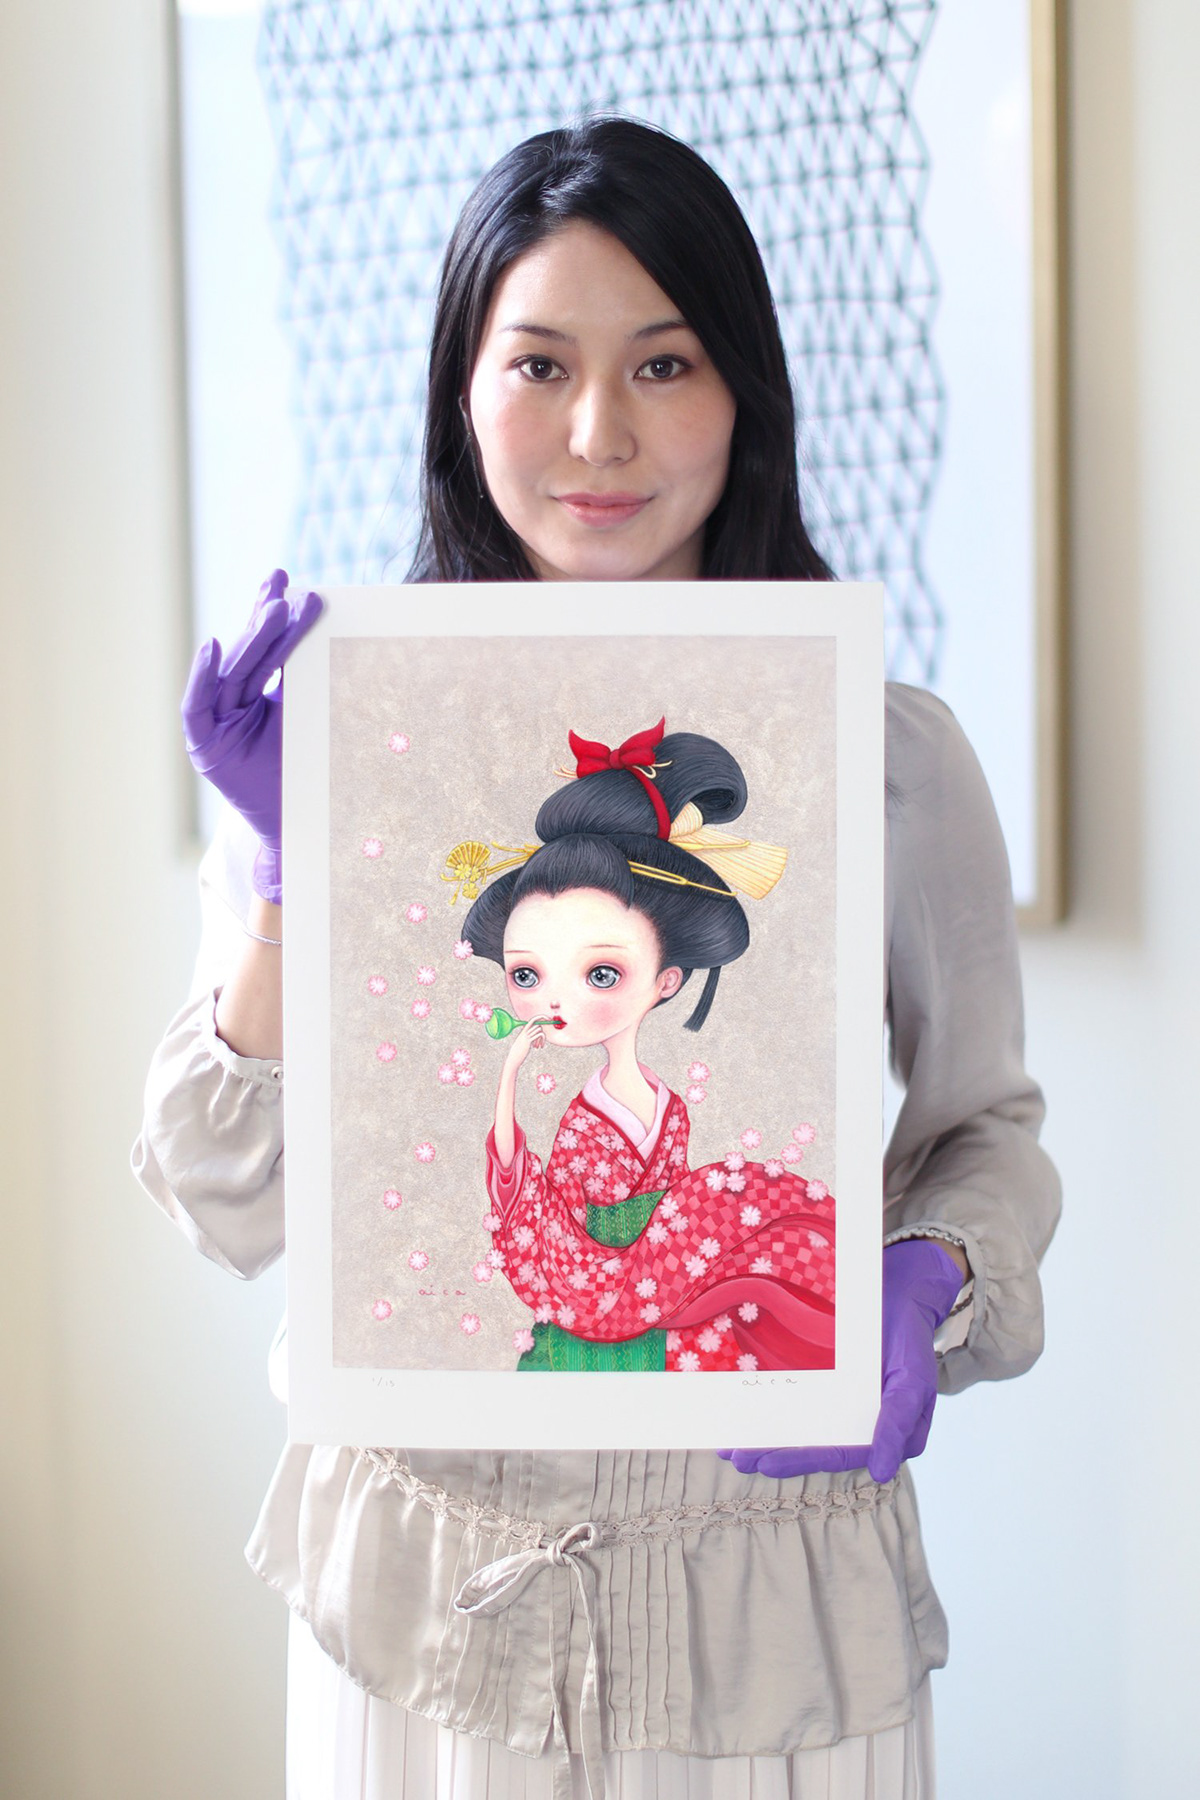 geisha Kitagawautamaro japan ukiyoe japaneseart houseofroulx aica aicaart kimono Fineartprint